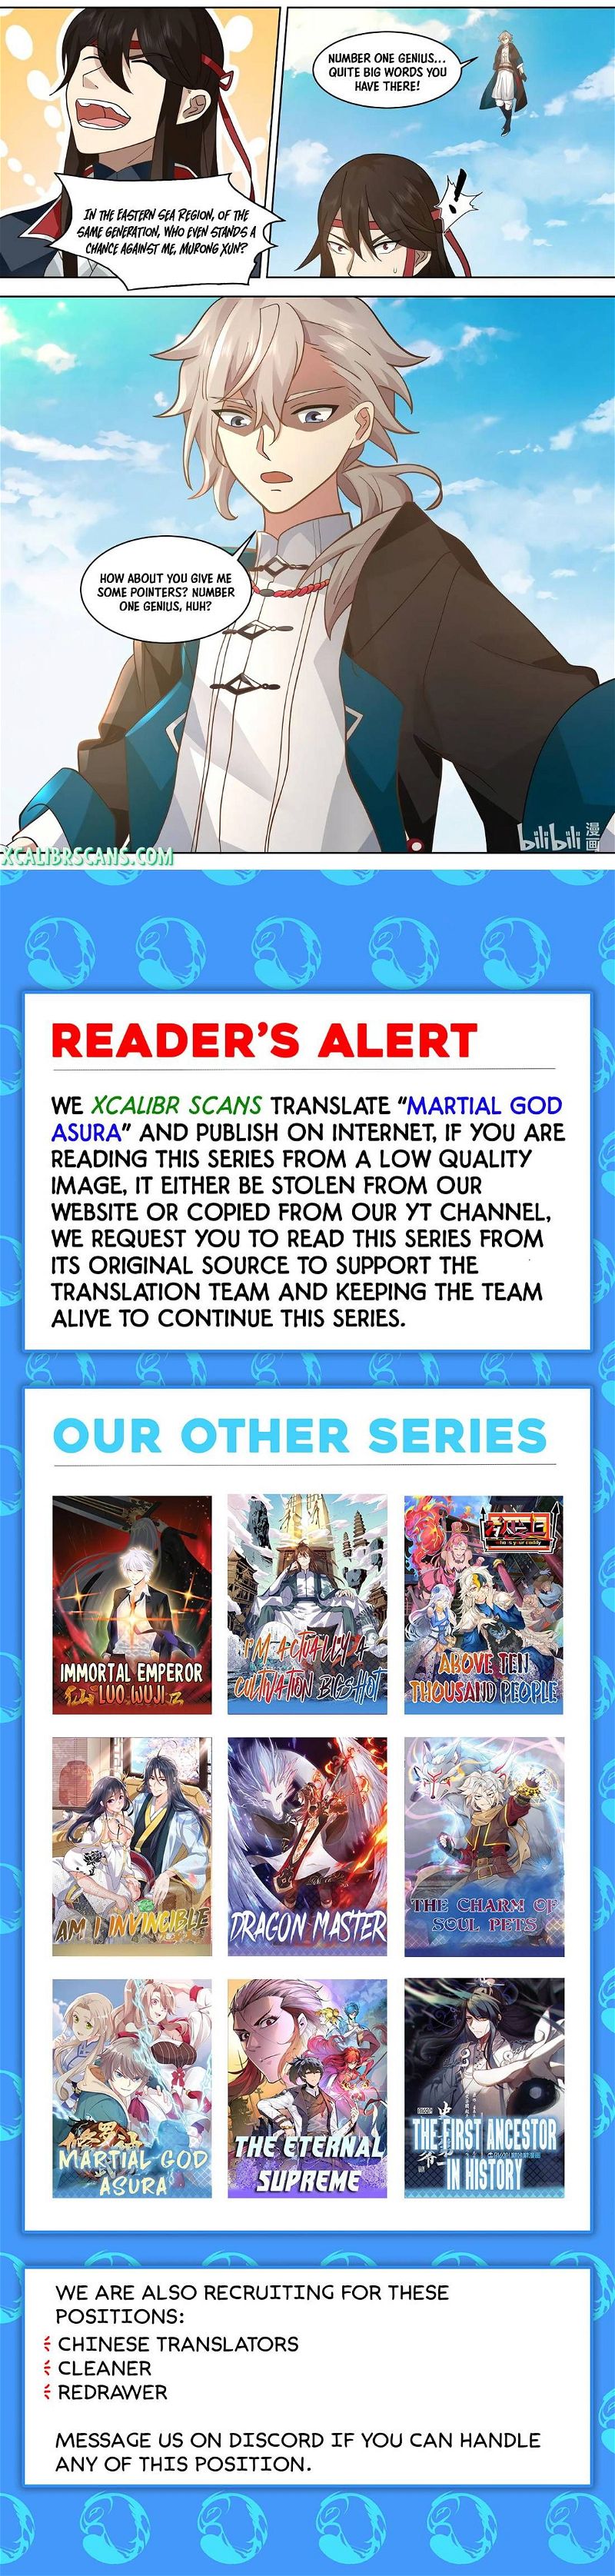 Martial God Asura Chapter 566 page 10